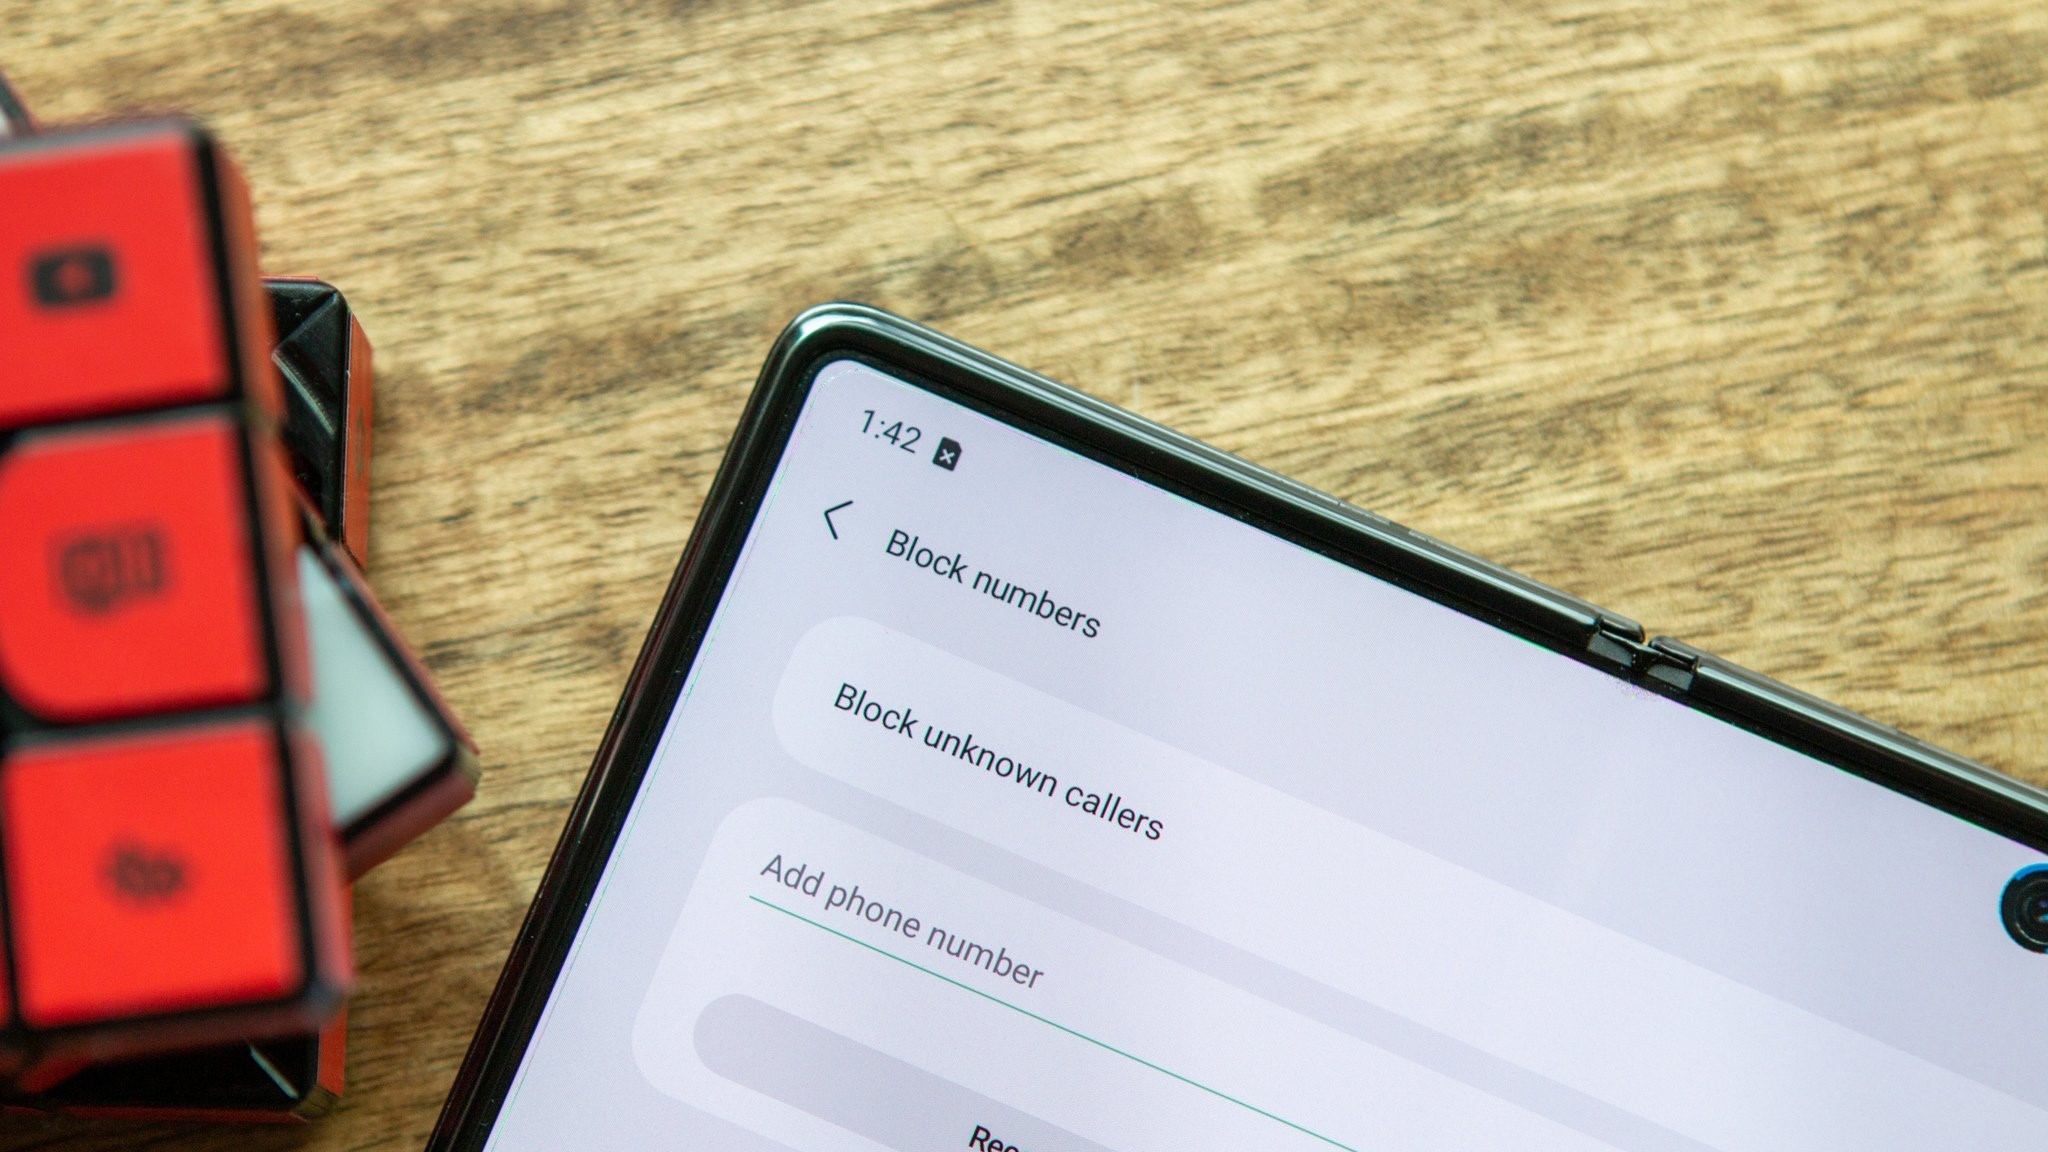 Block numbers on Samsung Galaxy Z Fold 2